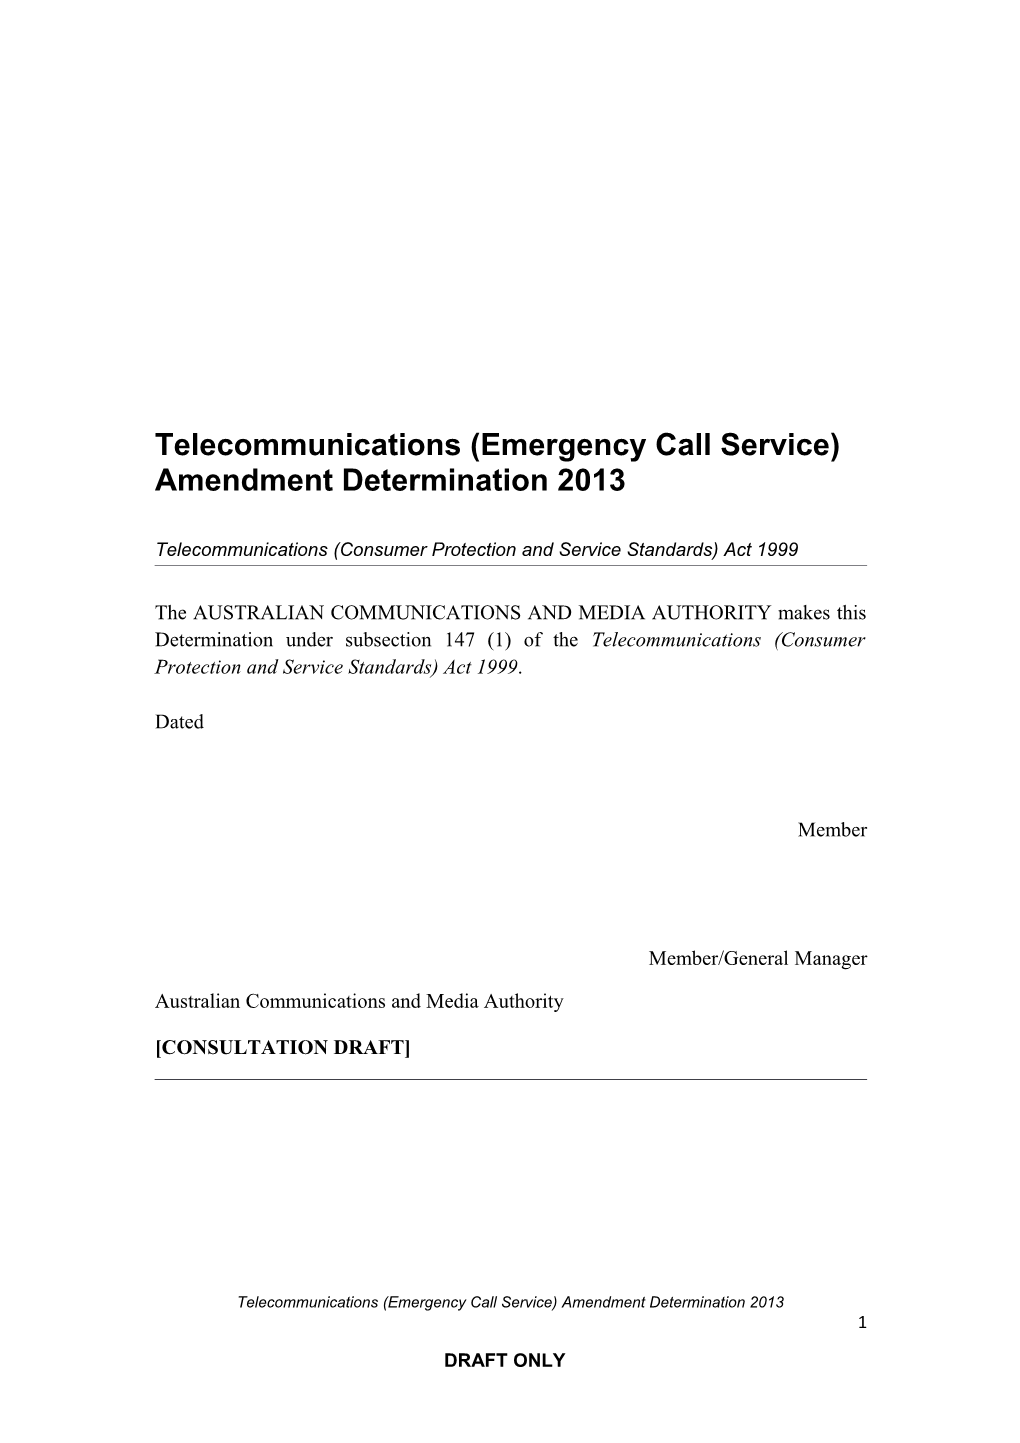 IFC 11/2013 - Telecommunications (Emergency Call Service) Amendment Determination 2013